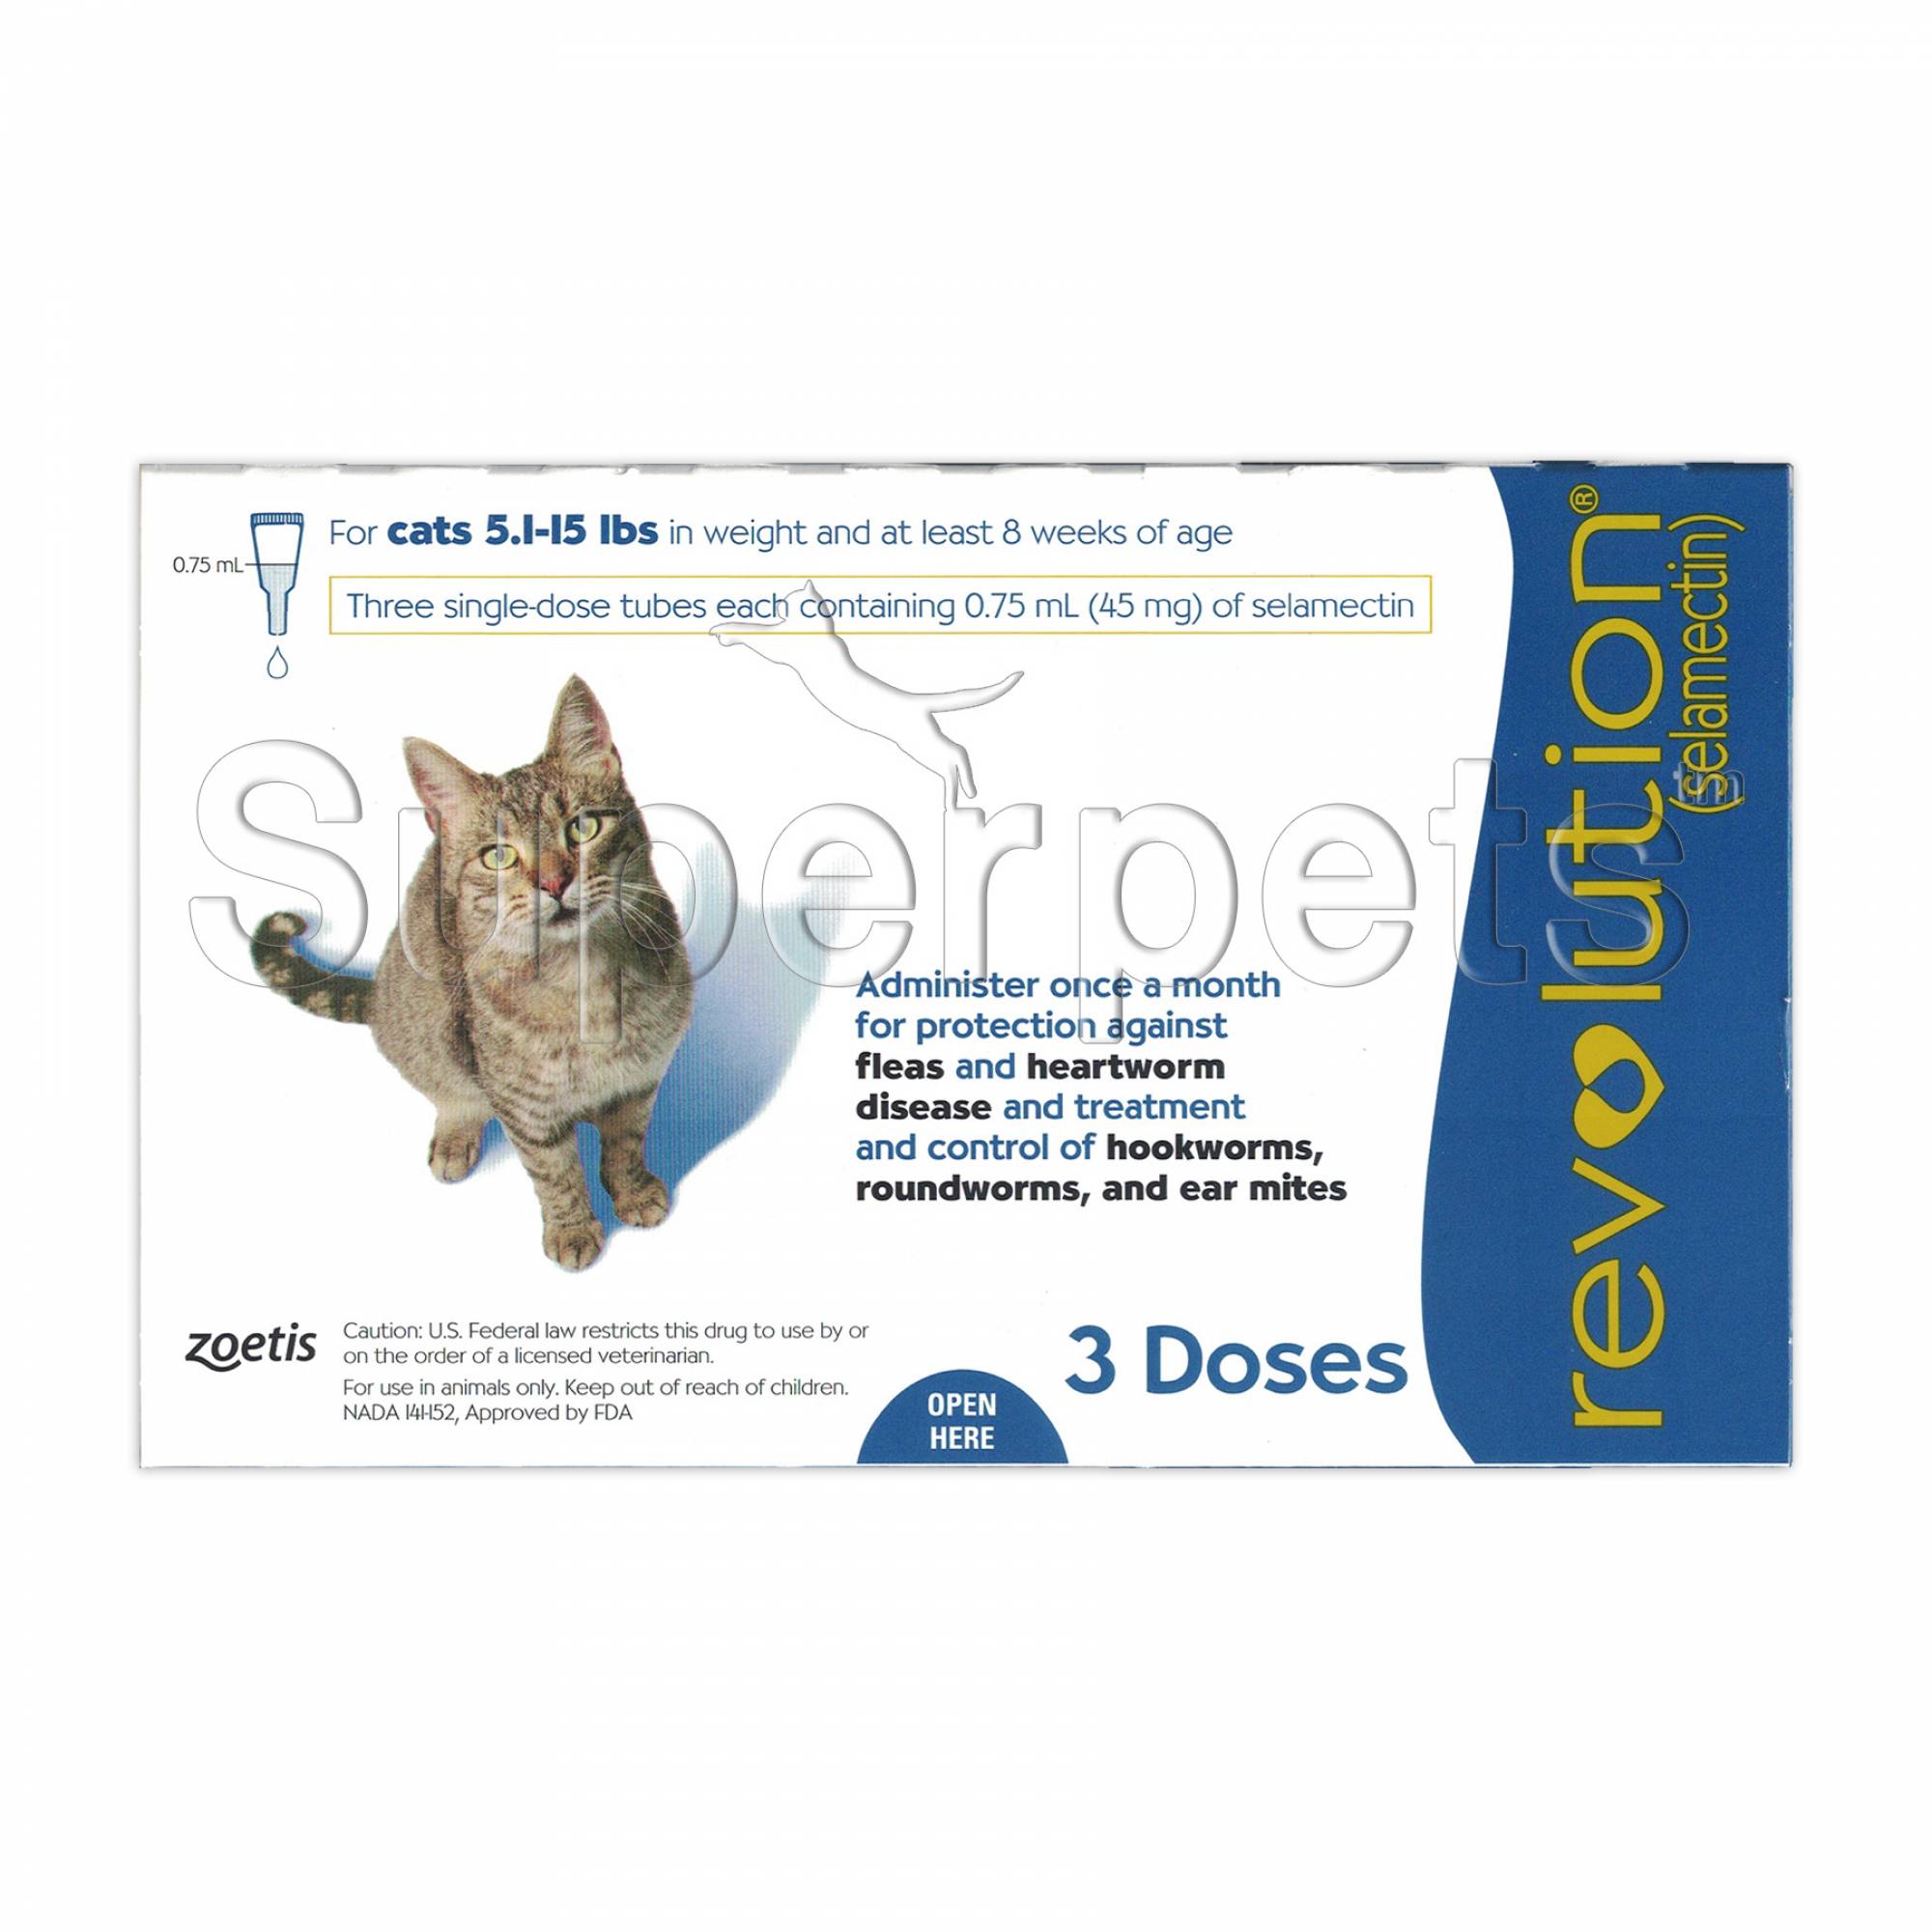 Revolution Spot-On for Cats 5.1 - 15lb (2.3 - 6.8kg) (Blue) 3 doses